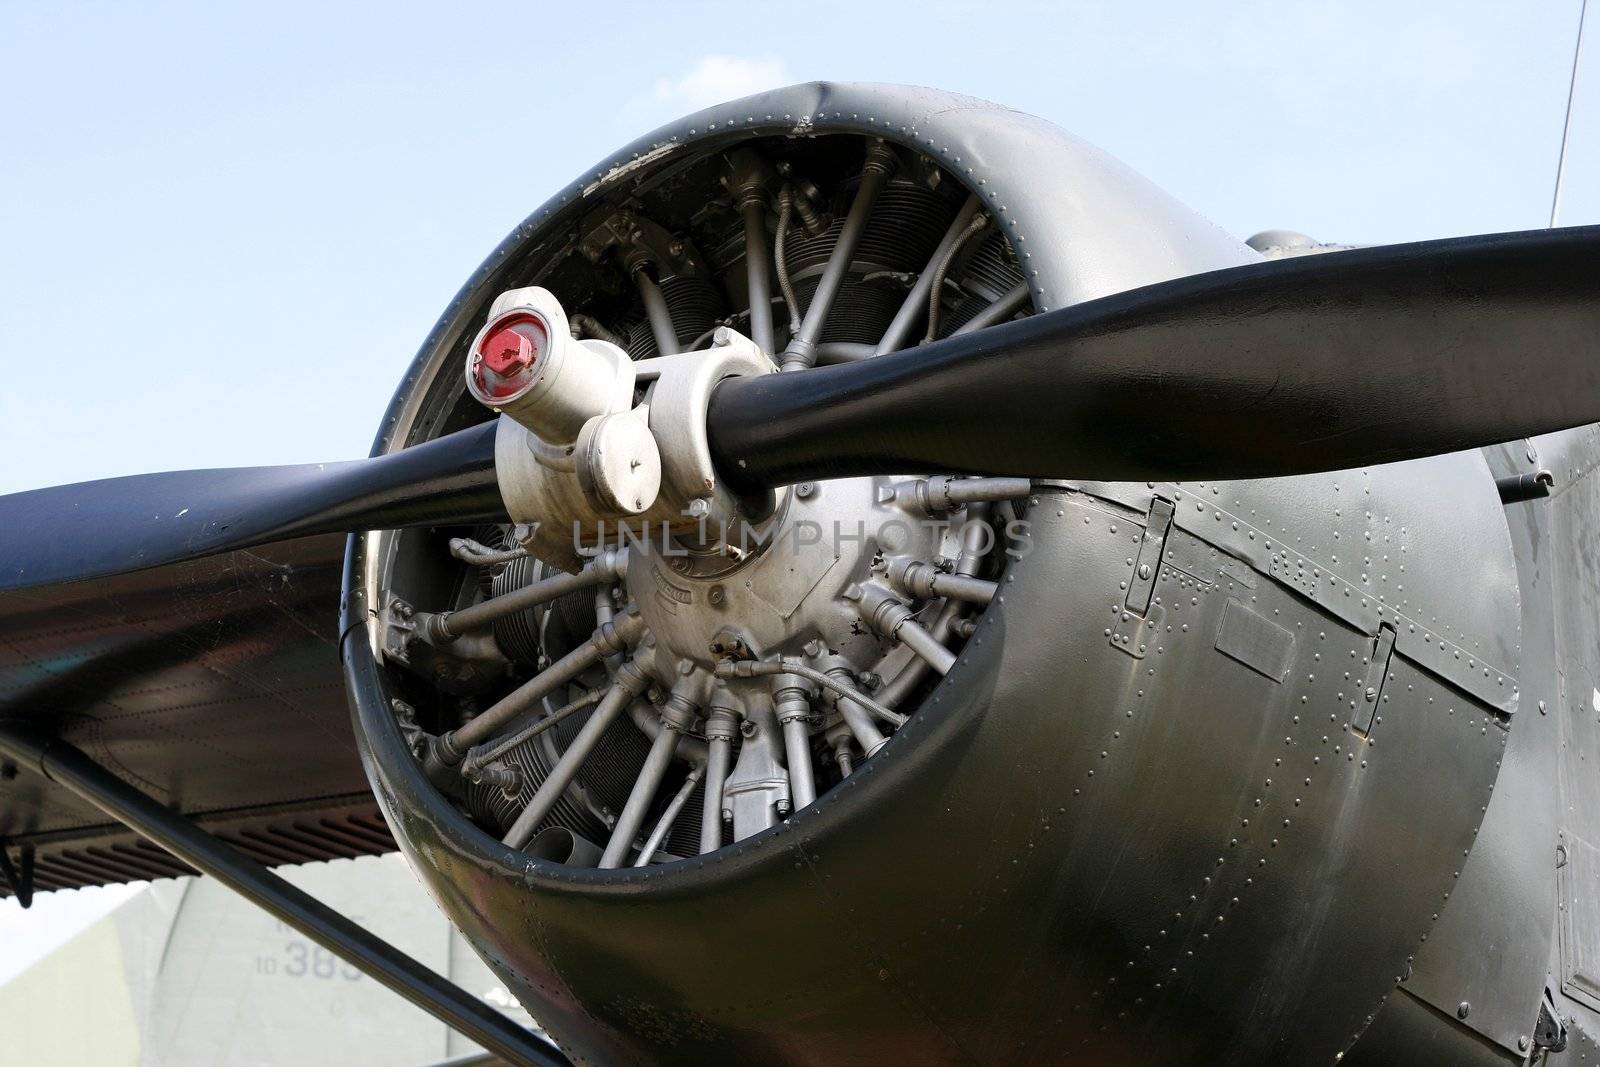 Close up of world war 2 airplane combat propeller